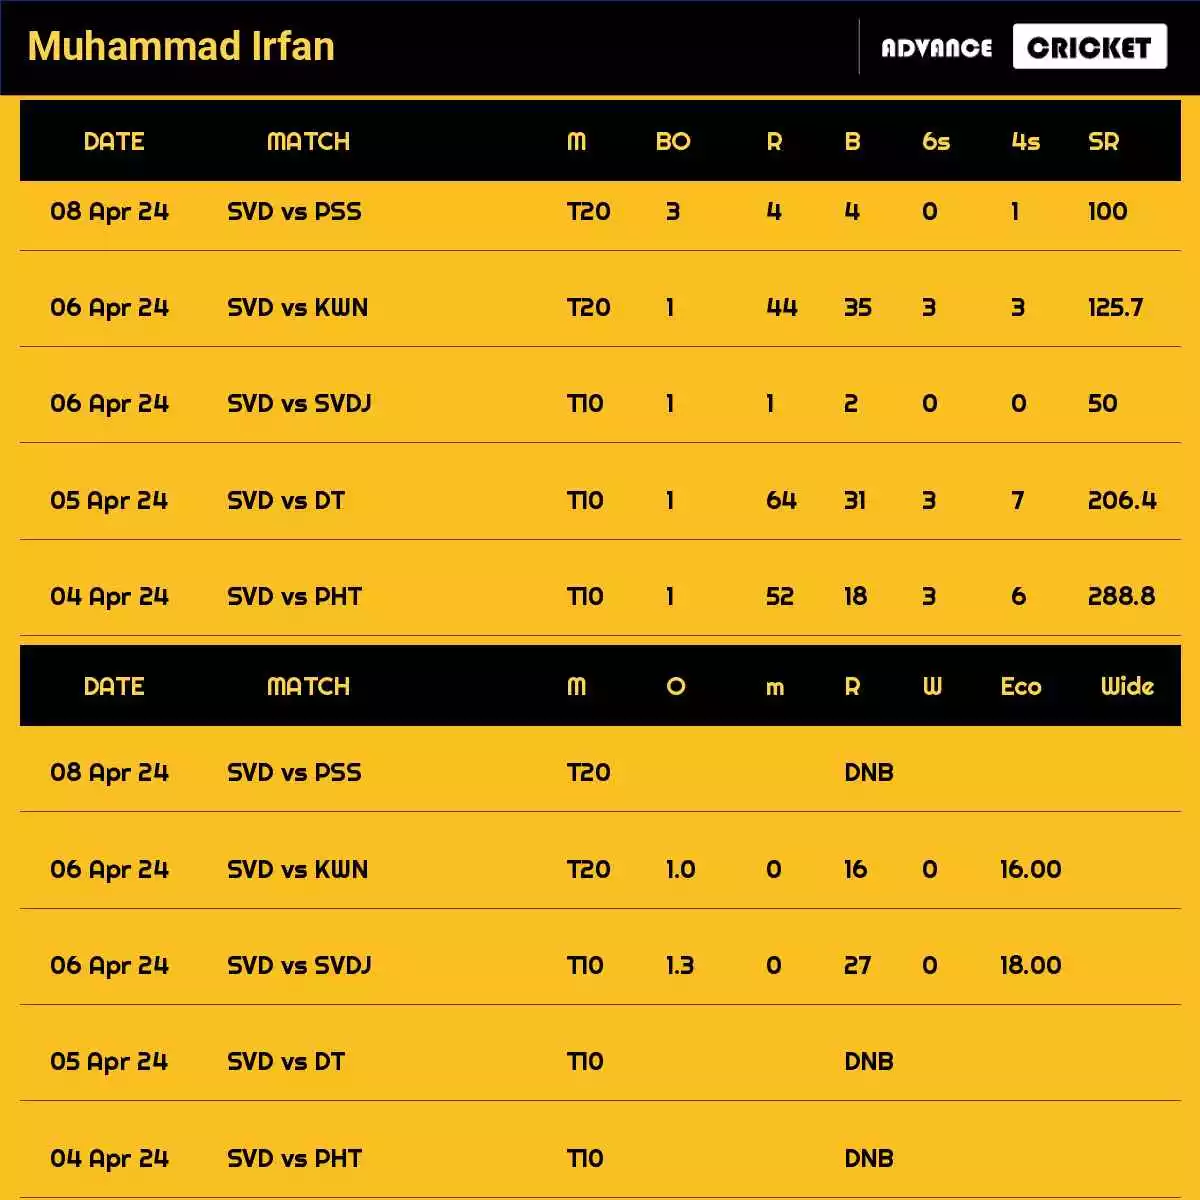 Muhammad Irfan Recent Matches Details Date Wise